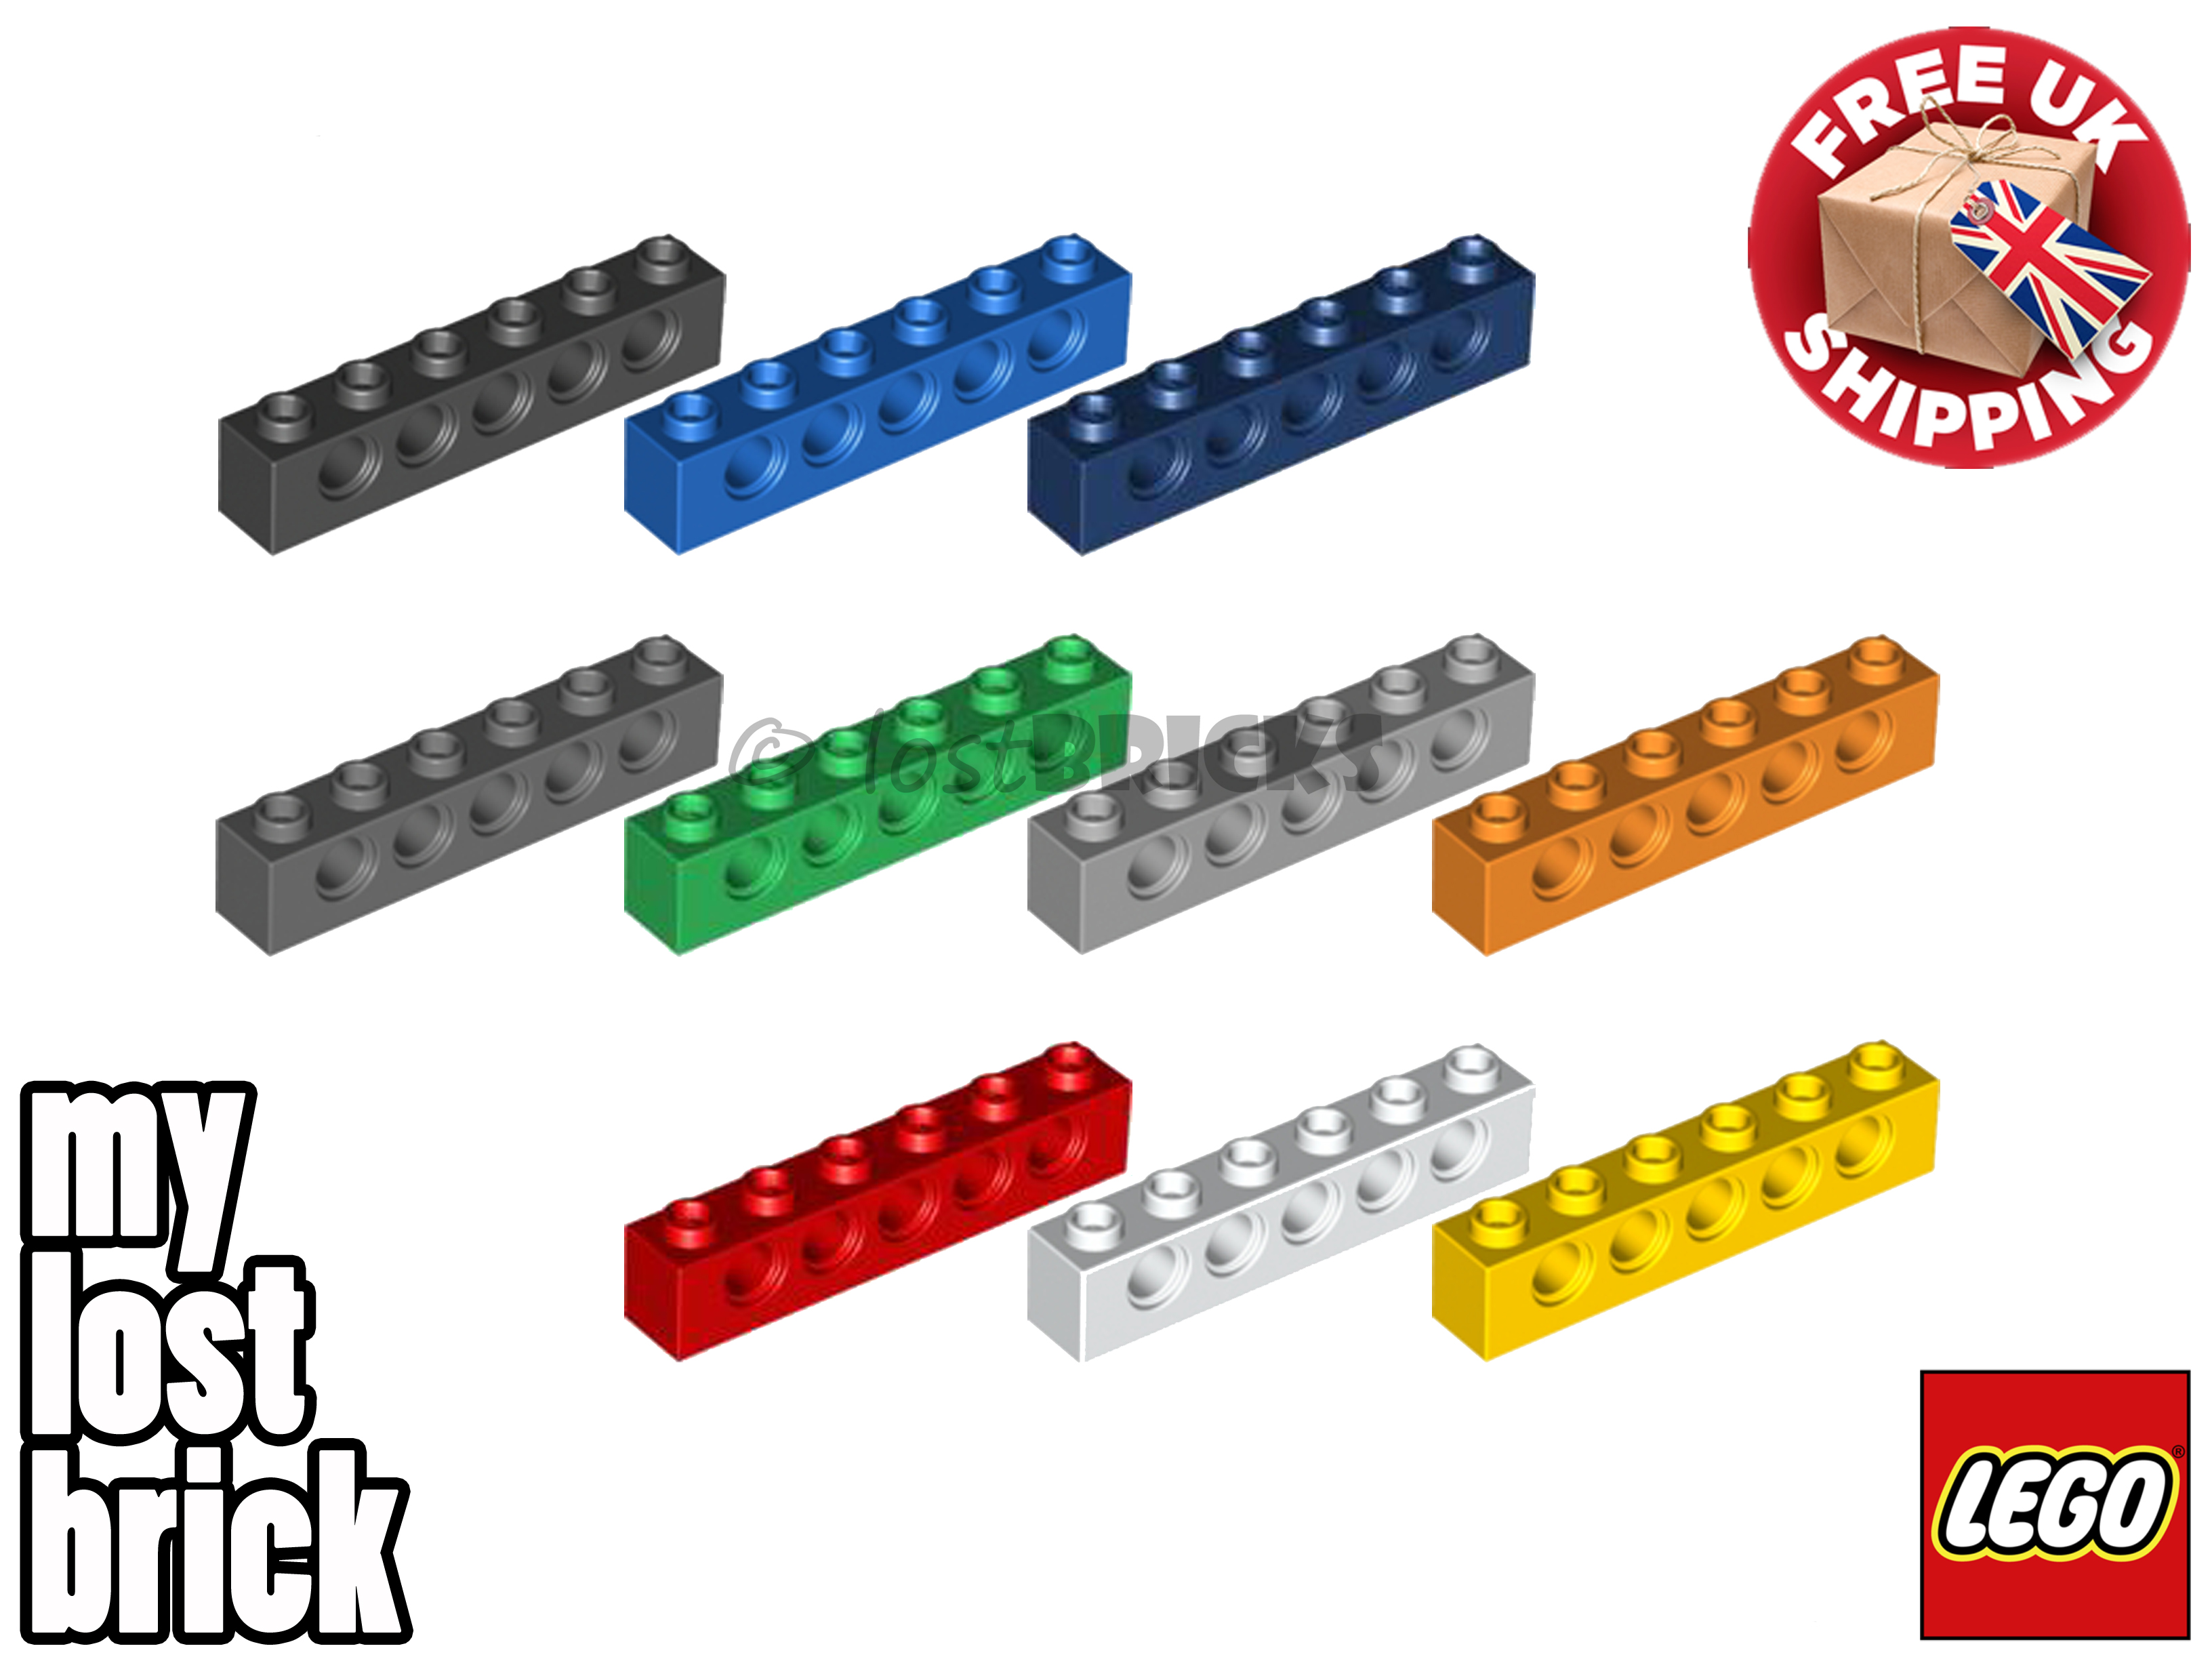 Lego 6 x 1 x 1 Technic Brick Part 3894 Choose Colour Free UK Postage